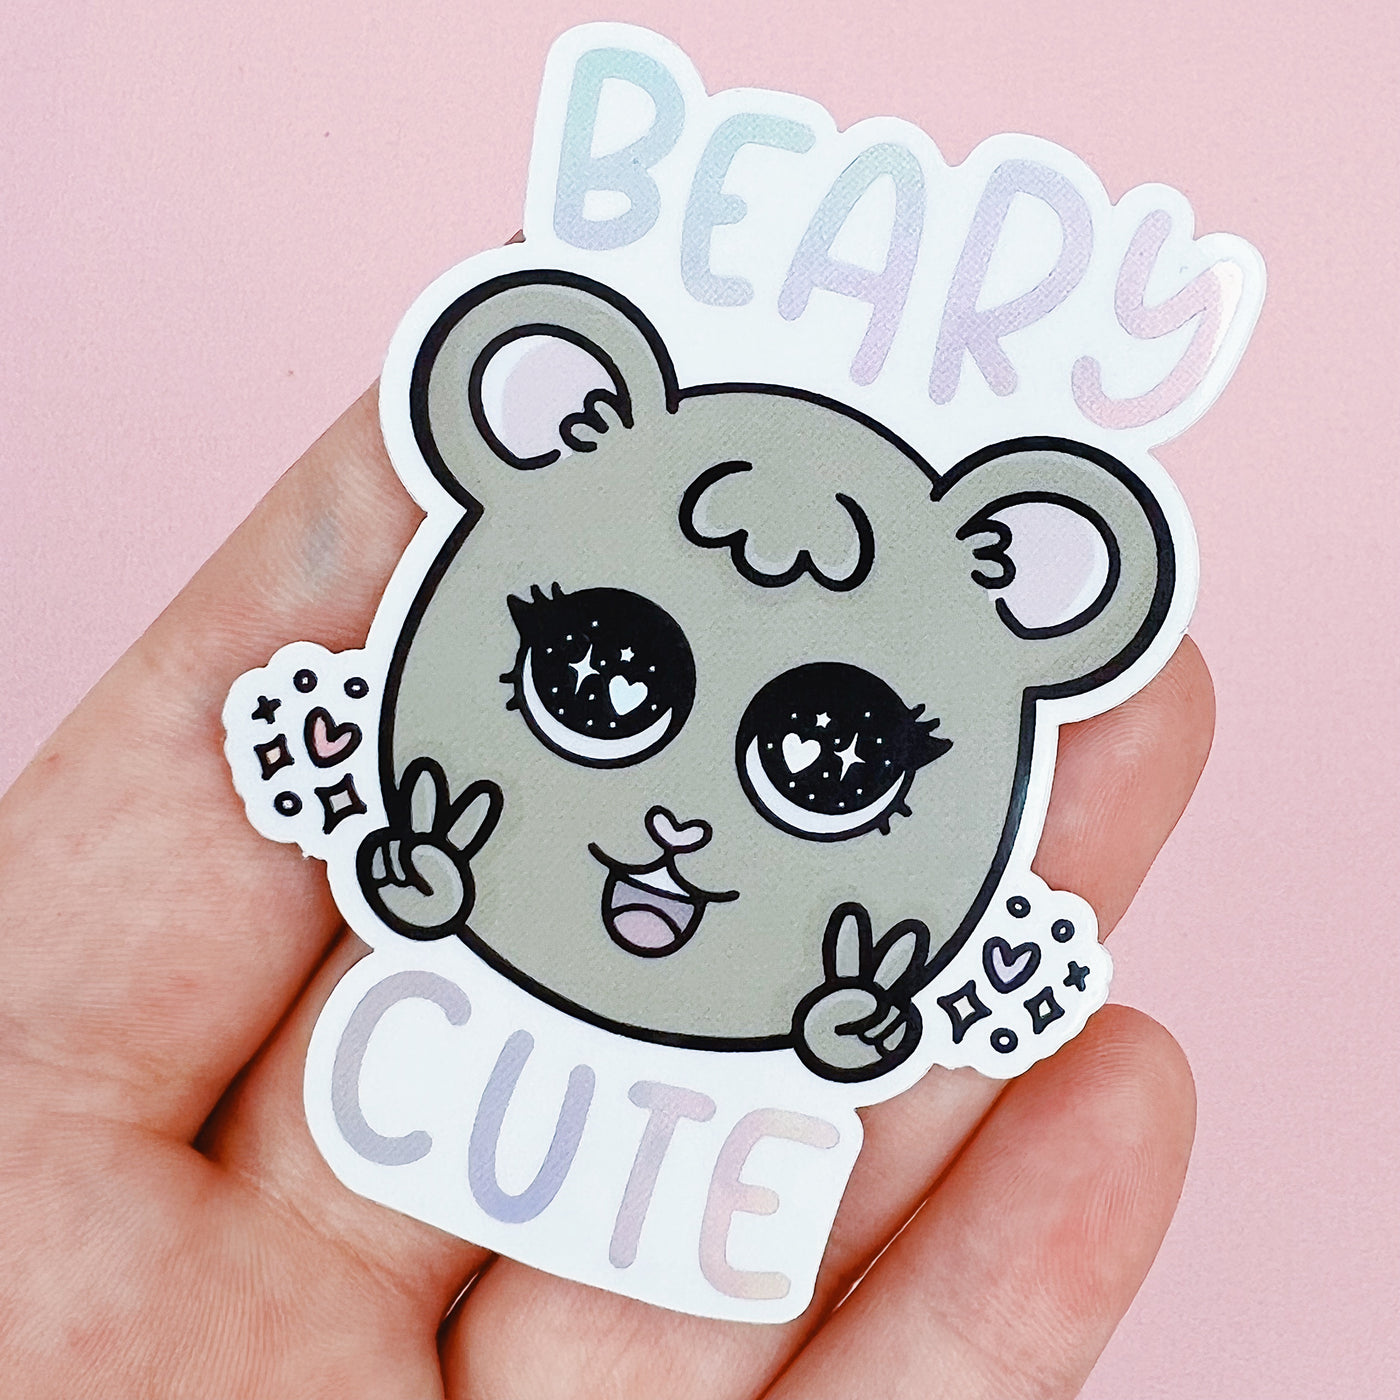 Beary Cute Vinyl Sticker Die Cut | Holographic Foil